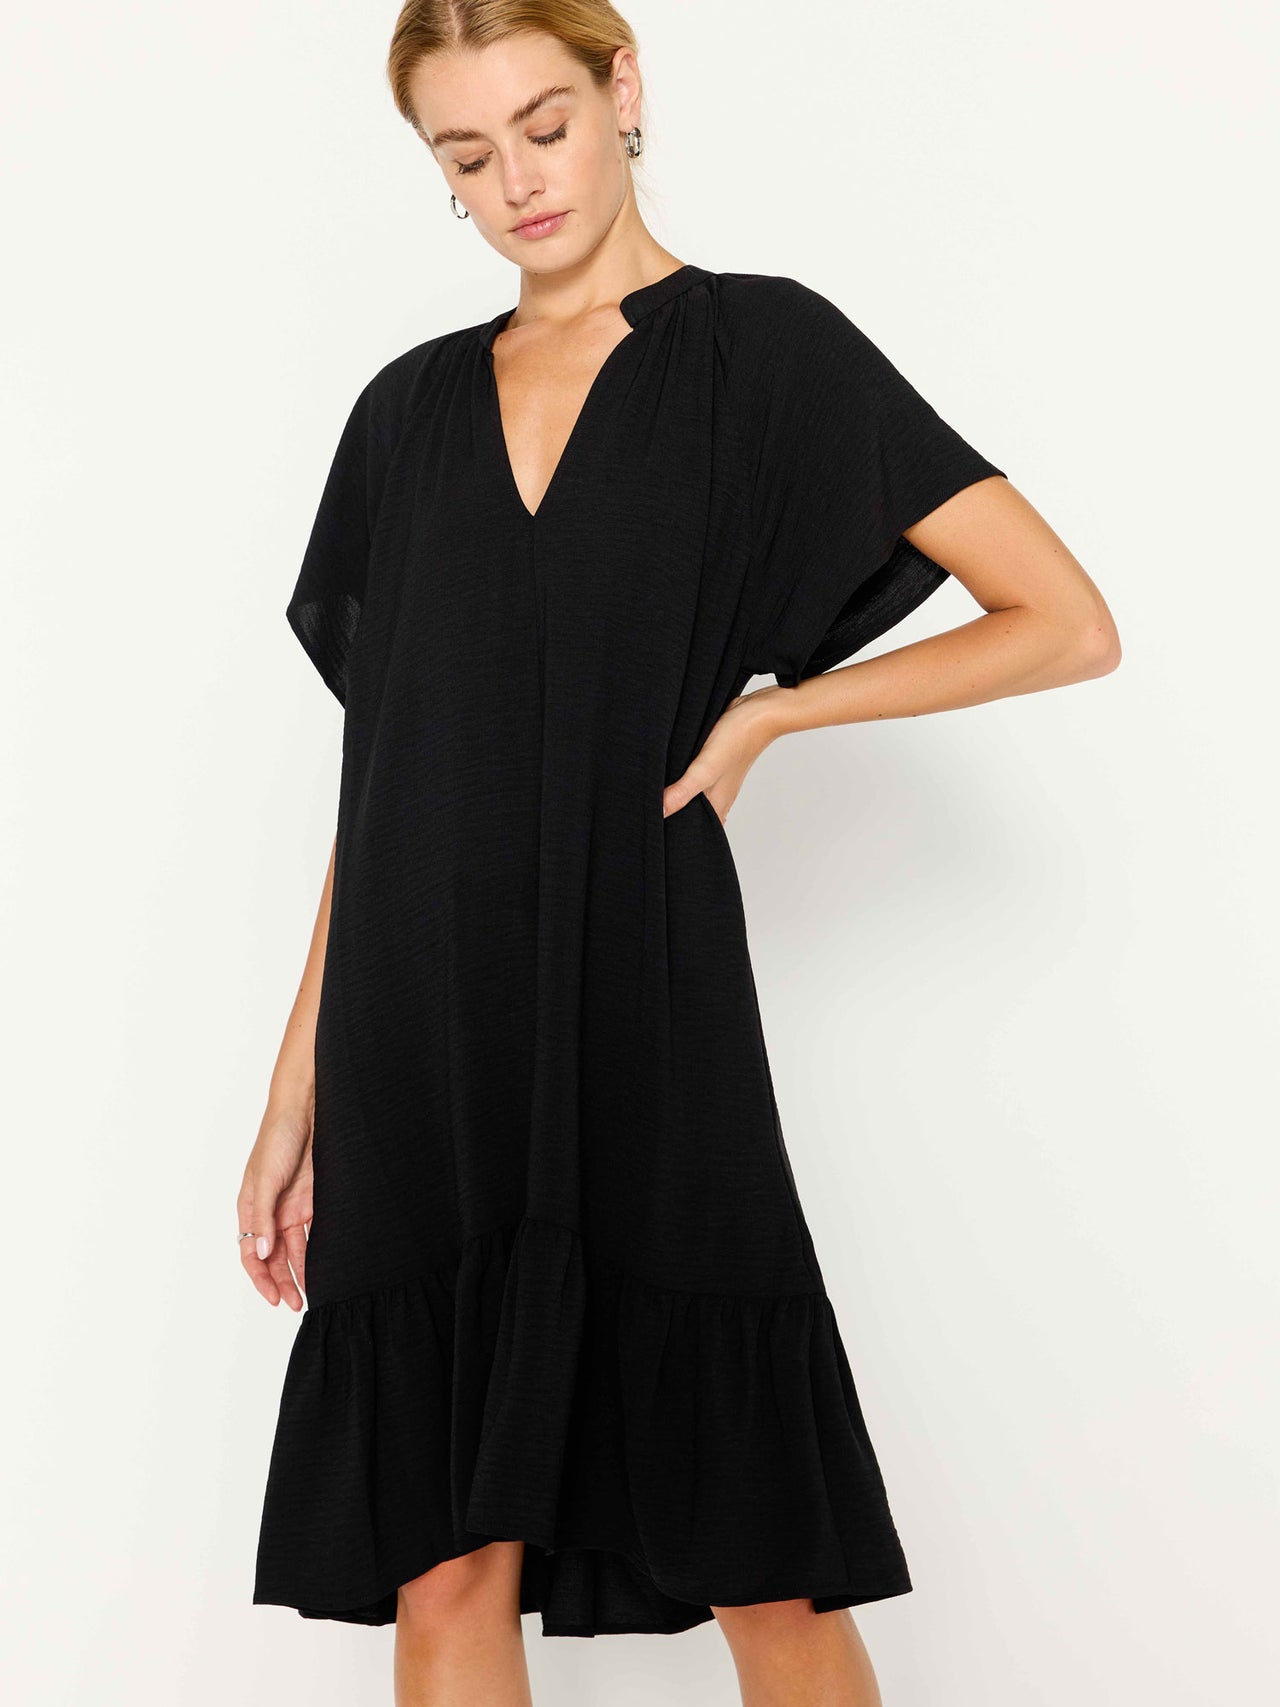 Women's Seda Flutter Sleeve Dress in Black Onyx